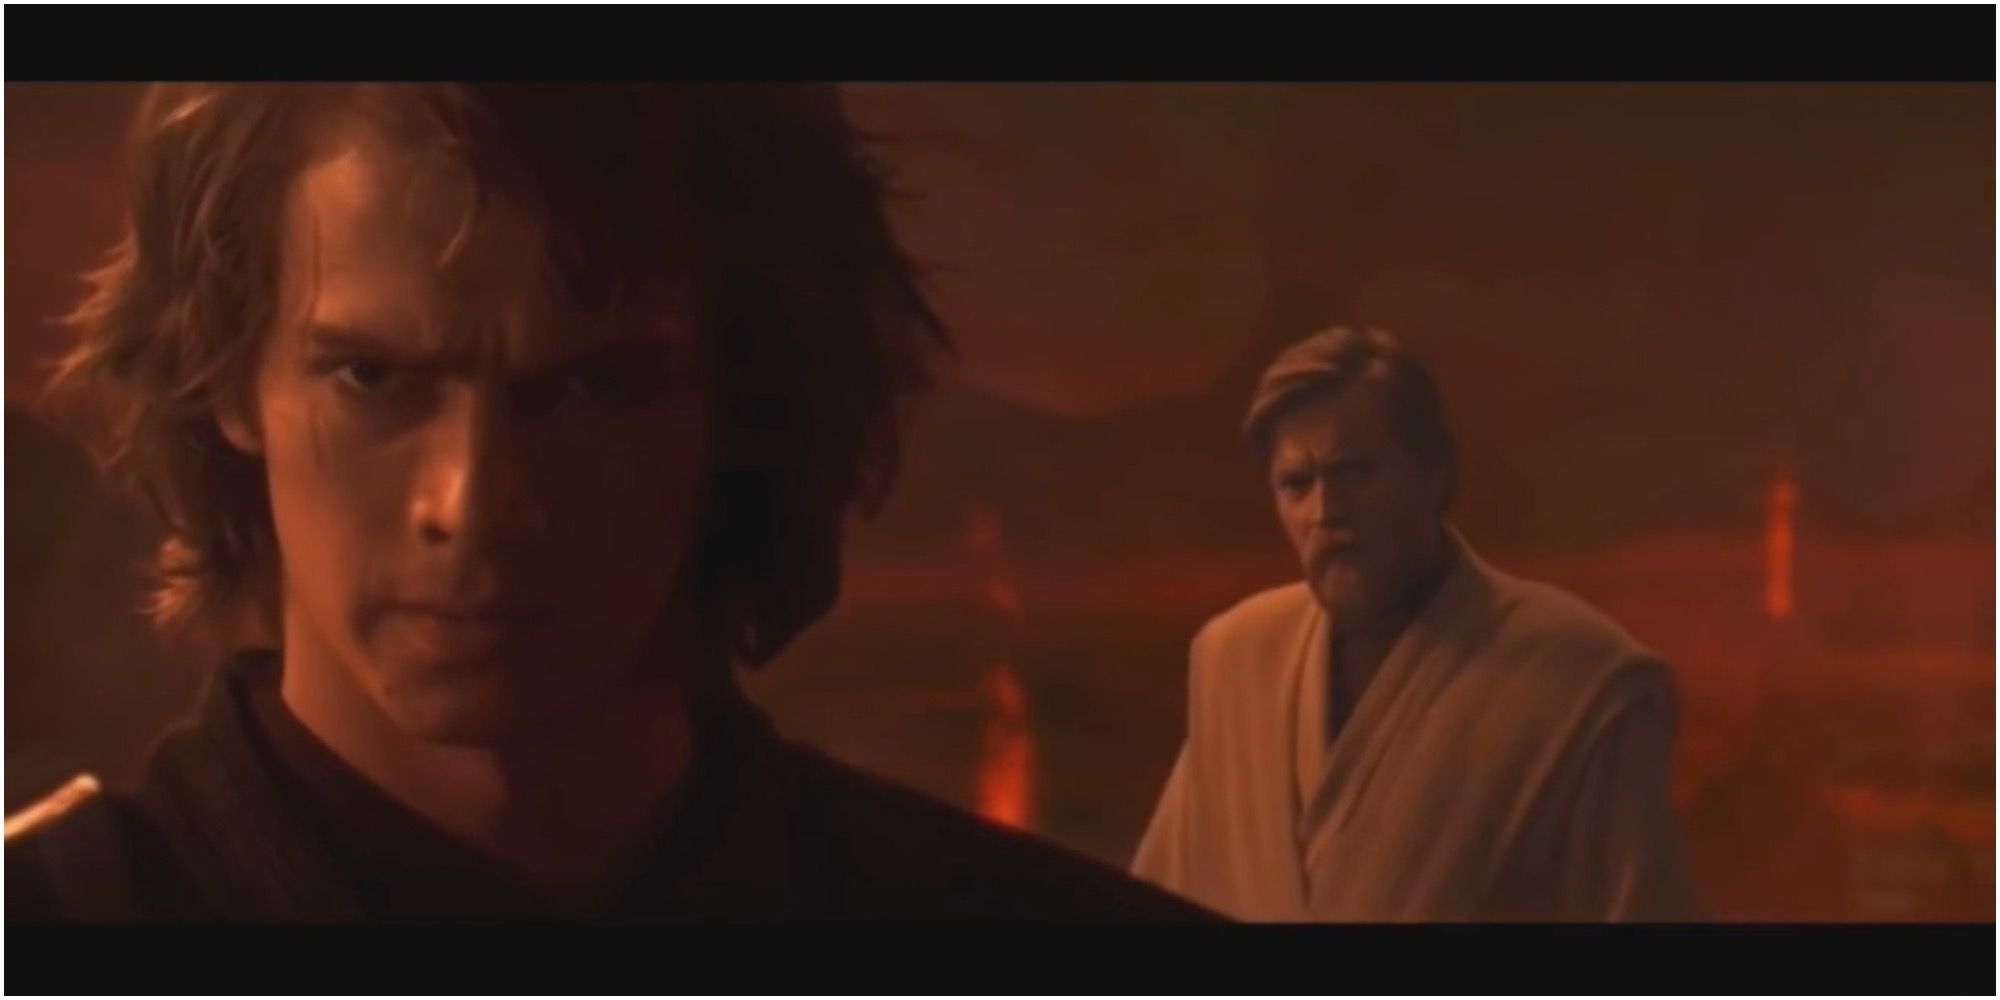 Anakin Skywalker declares his new empire